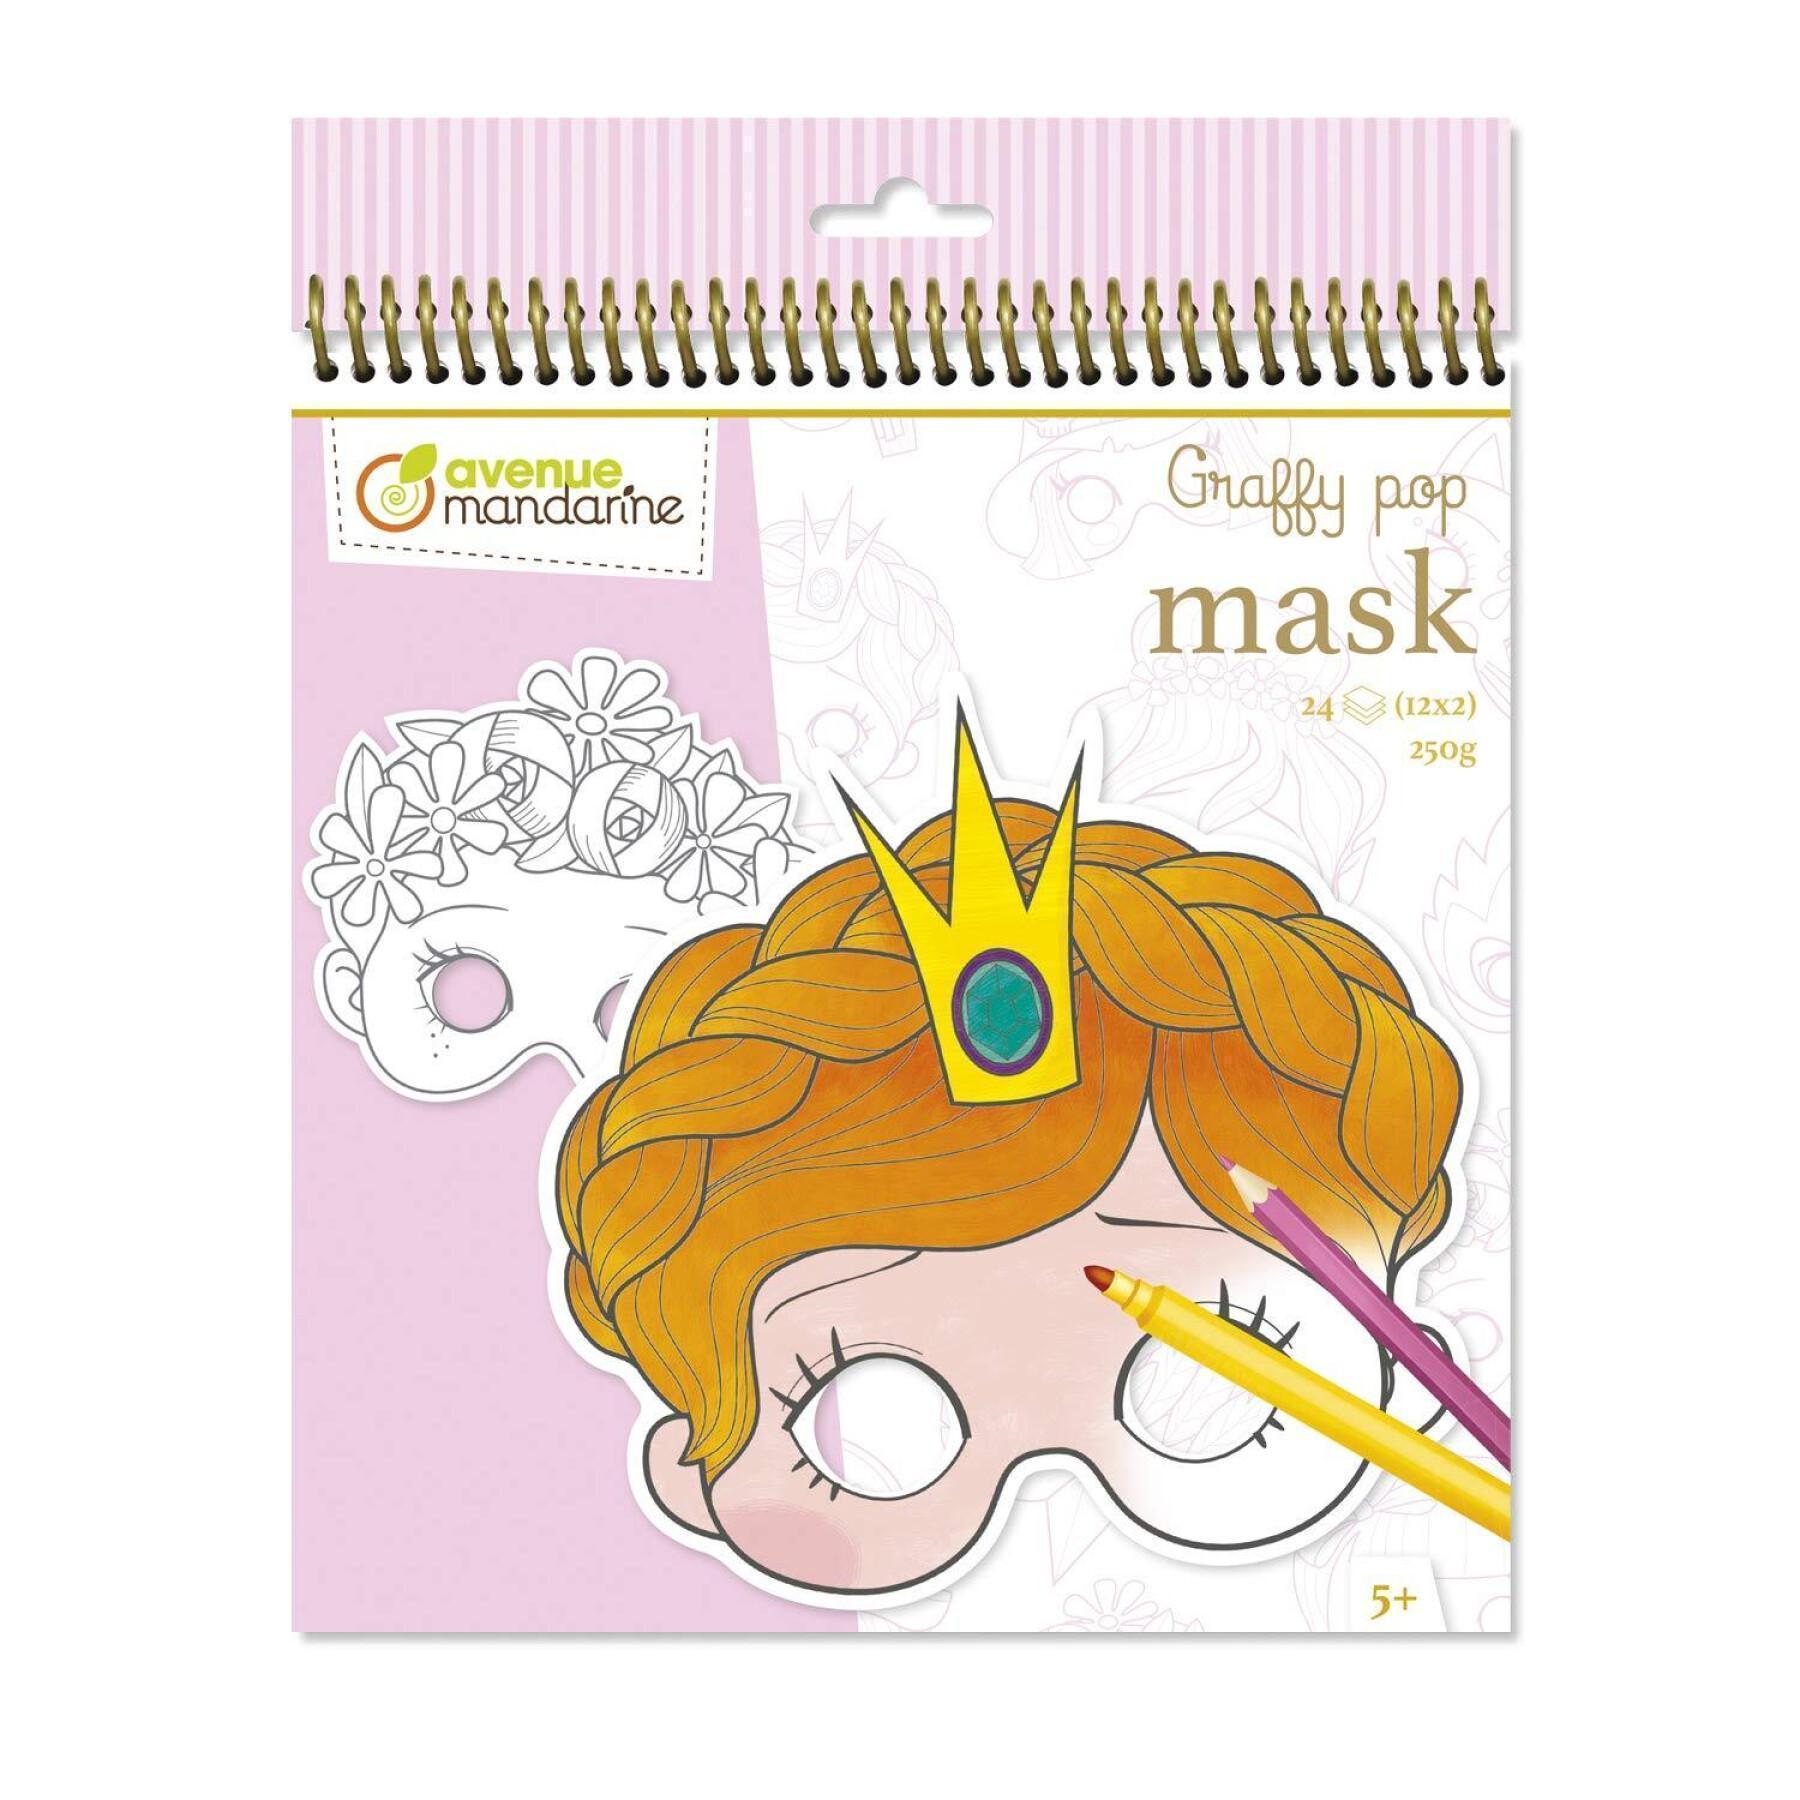 24 kleur- en knipvellen voor meisjes Avenue Mandarine Graffy Pop Mask